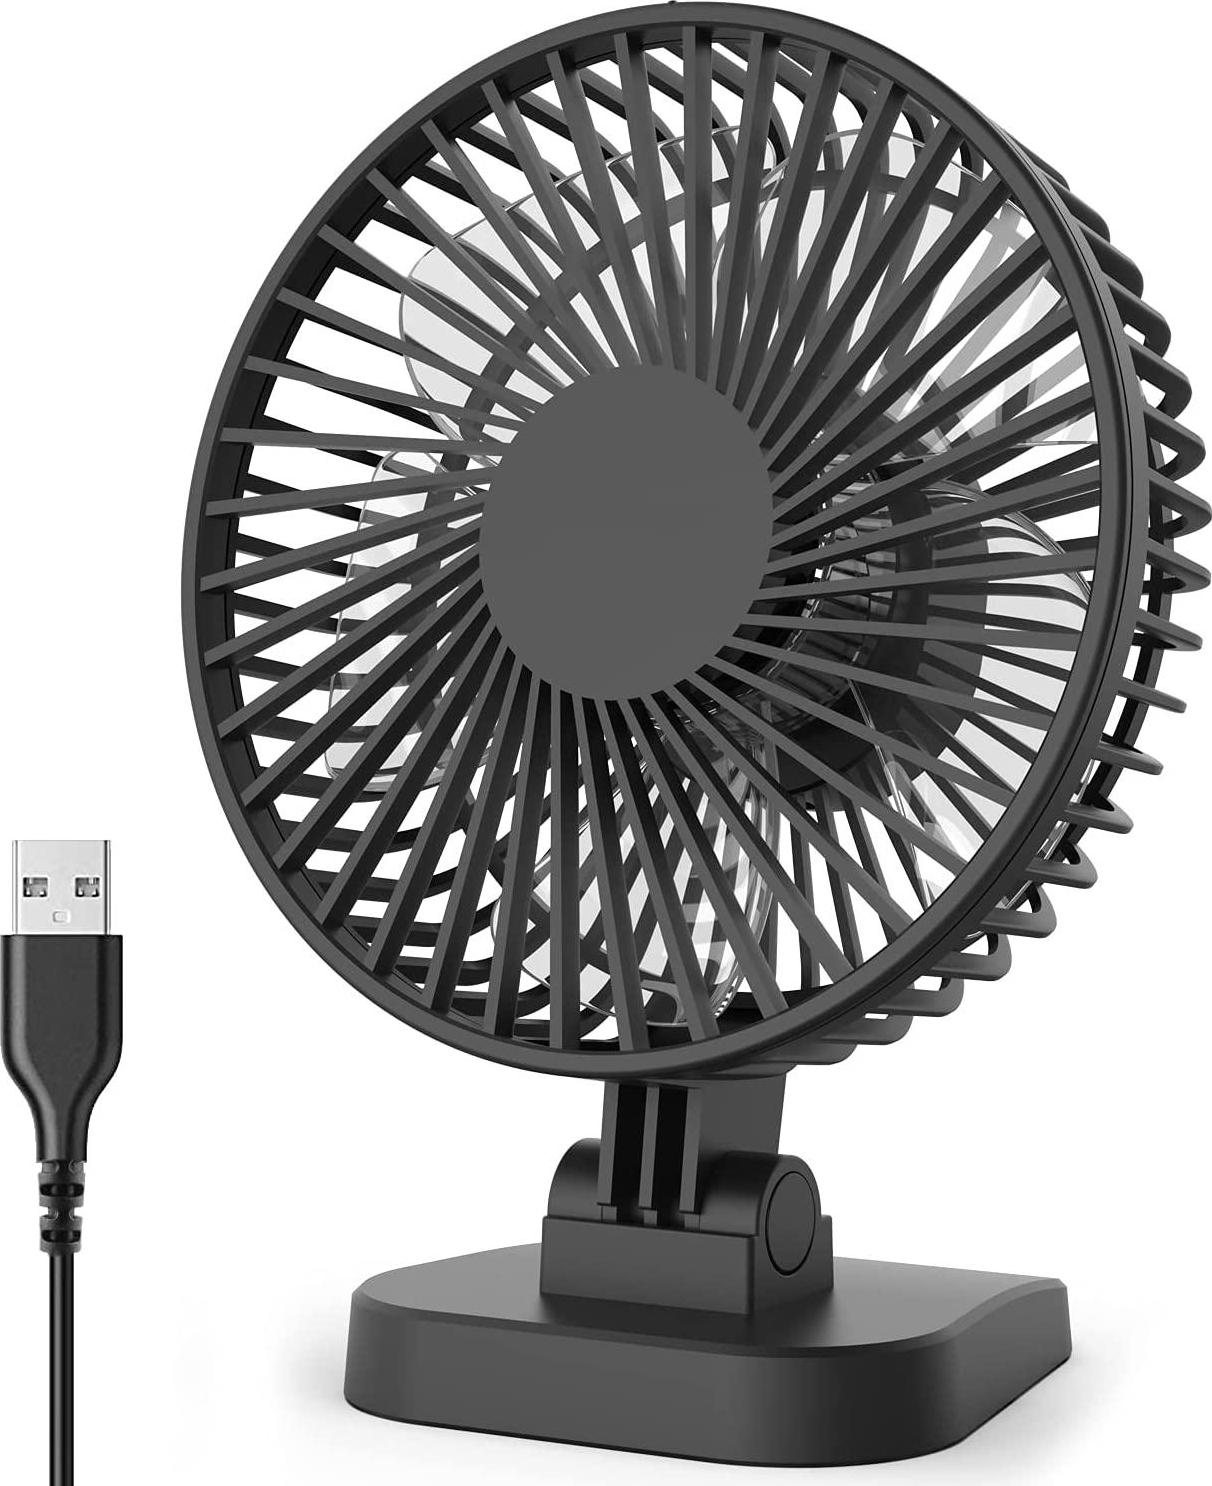 HomeMarvel, Small USB Desk Fan, Quiet Fan for Office Home Desktop, 3 Settings, Superpower Airflow, Less Noise, 40°Tilting, 3.9 feet Cord, USB Plug In(Black White)